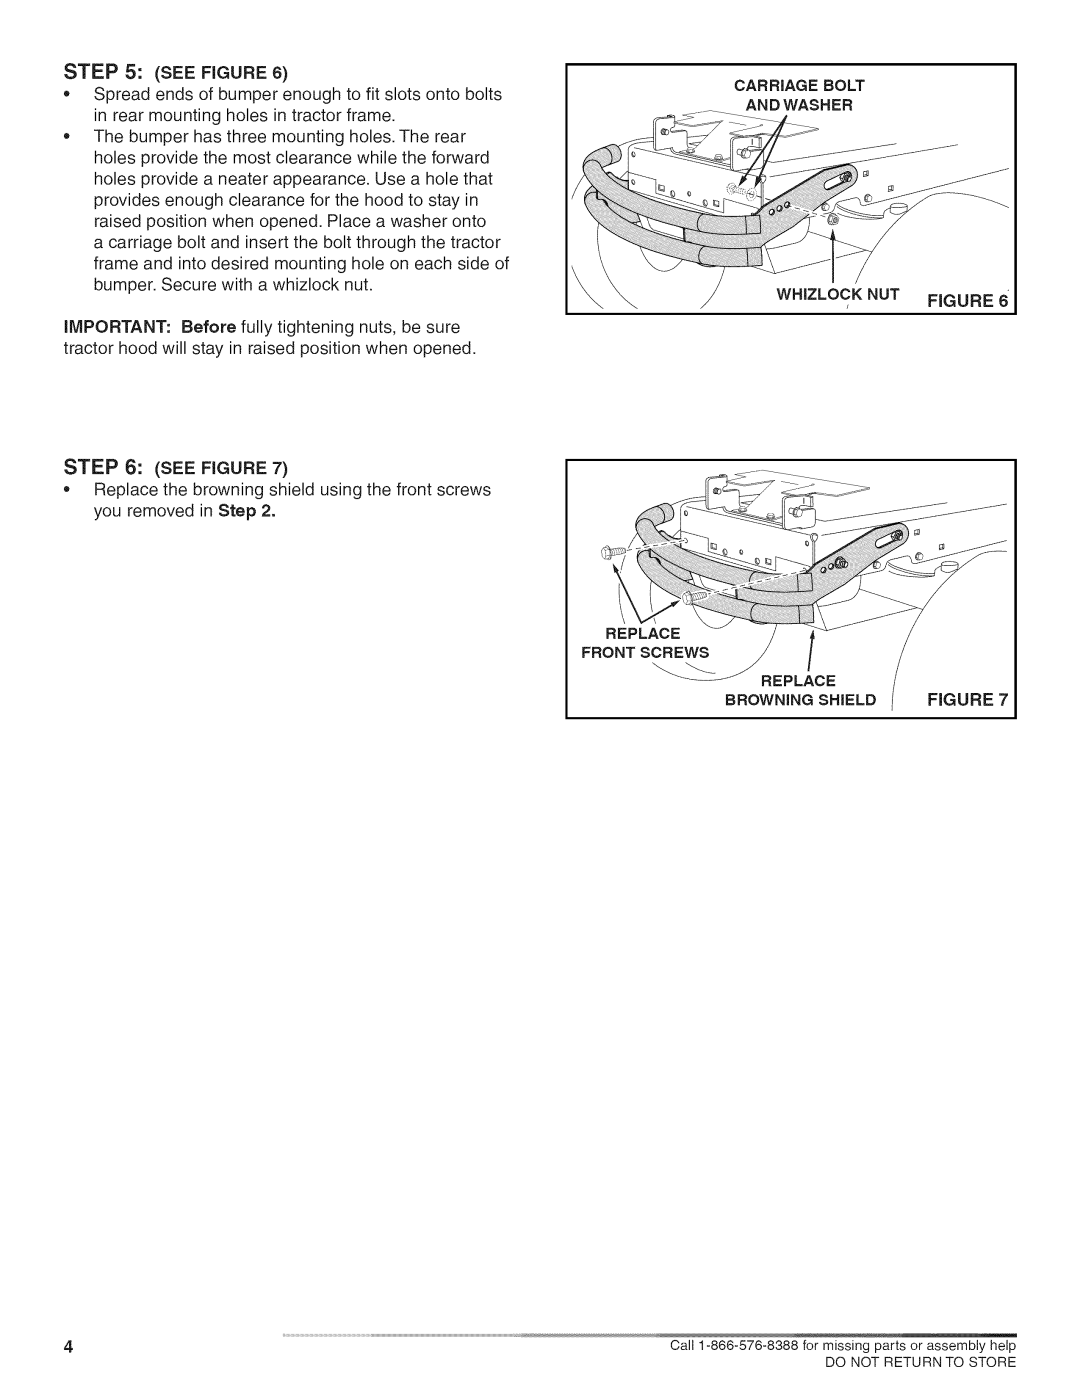 Craftsman 486.24608 manual See Figure 